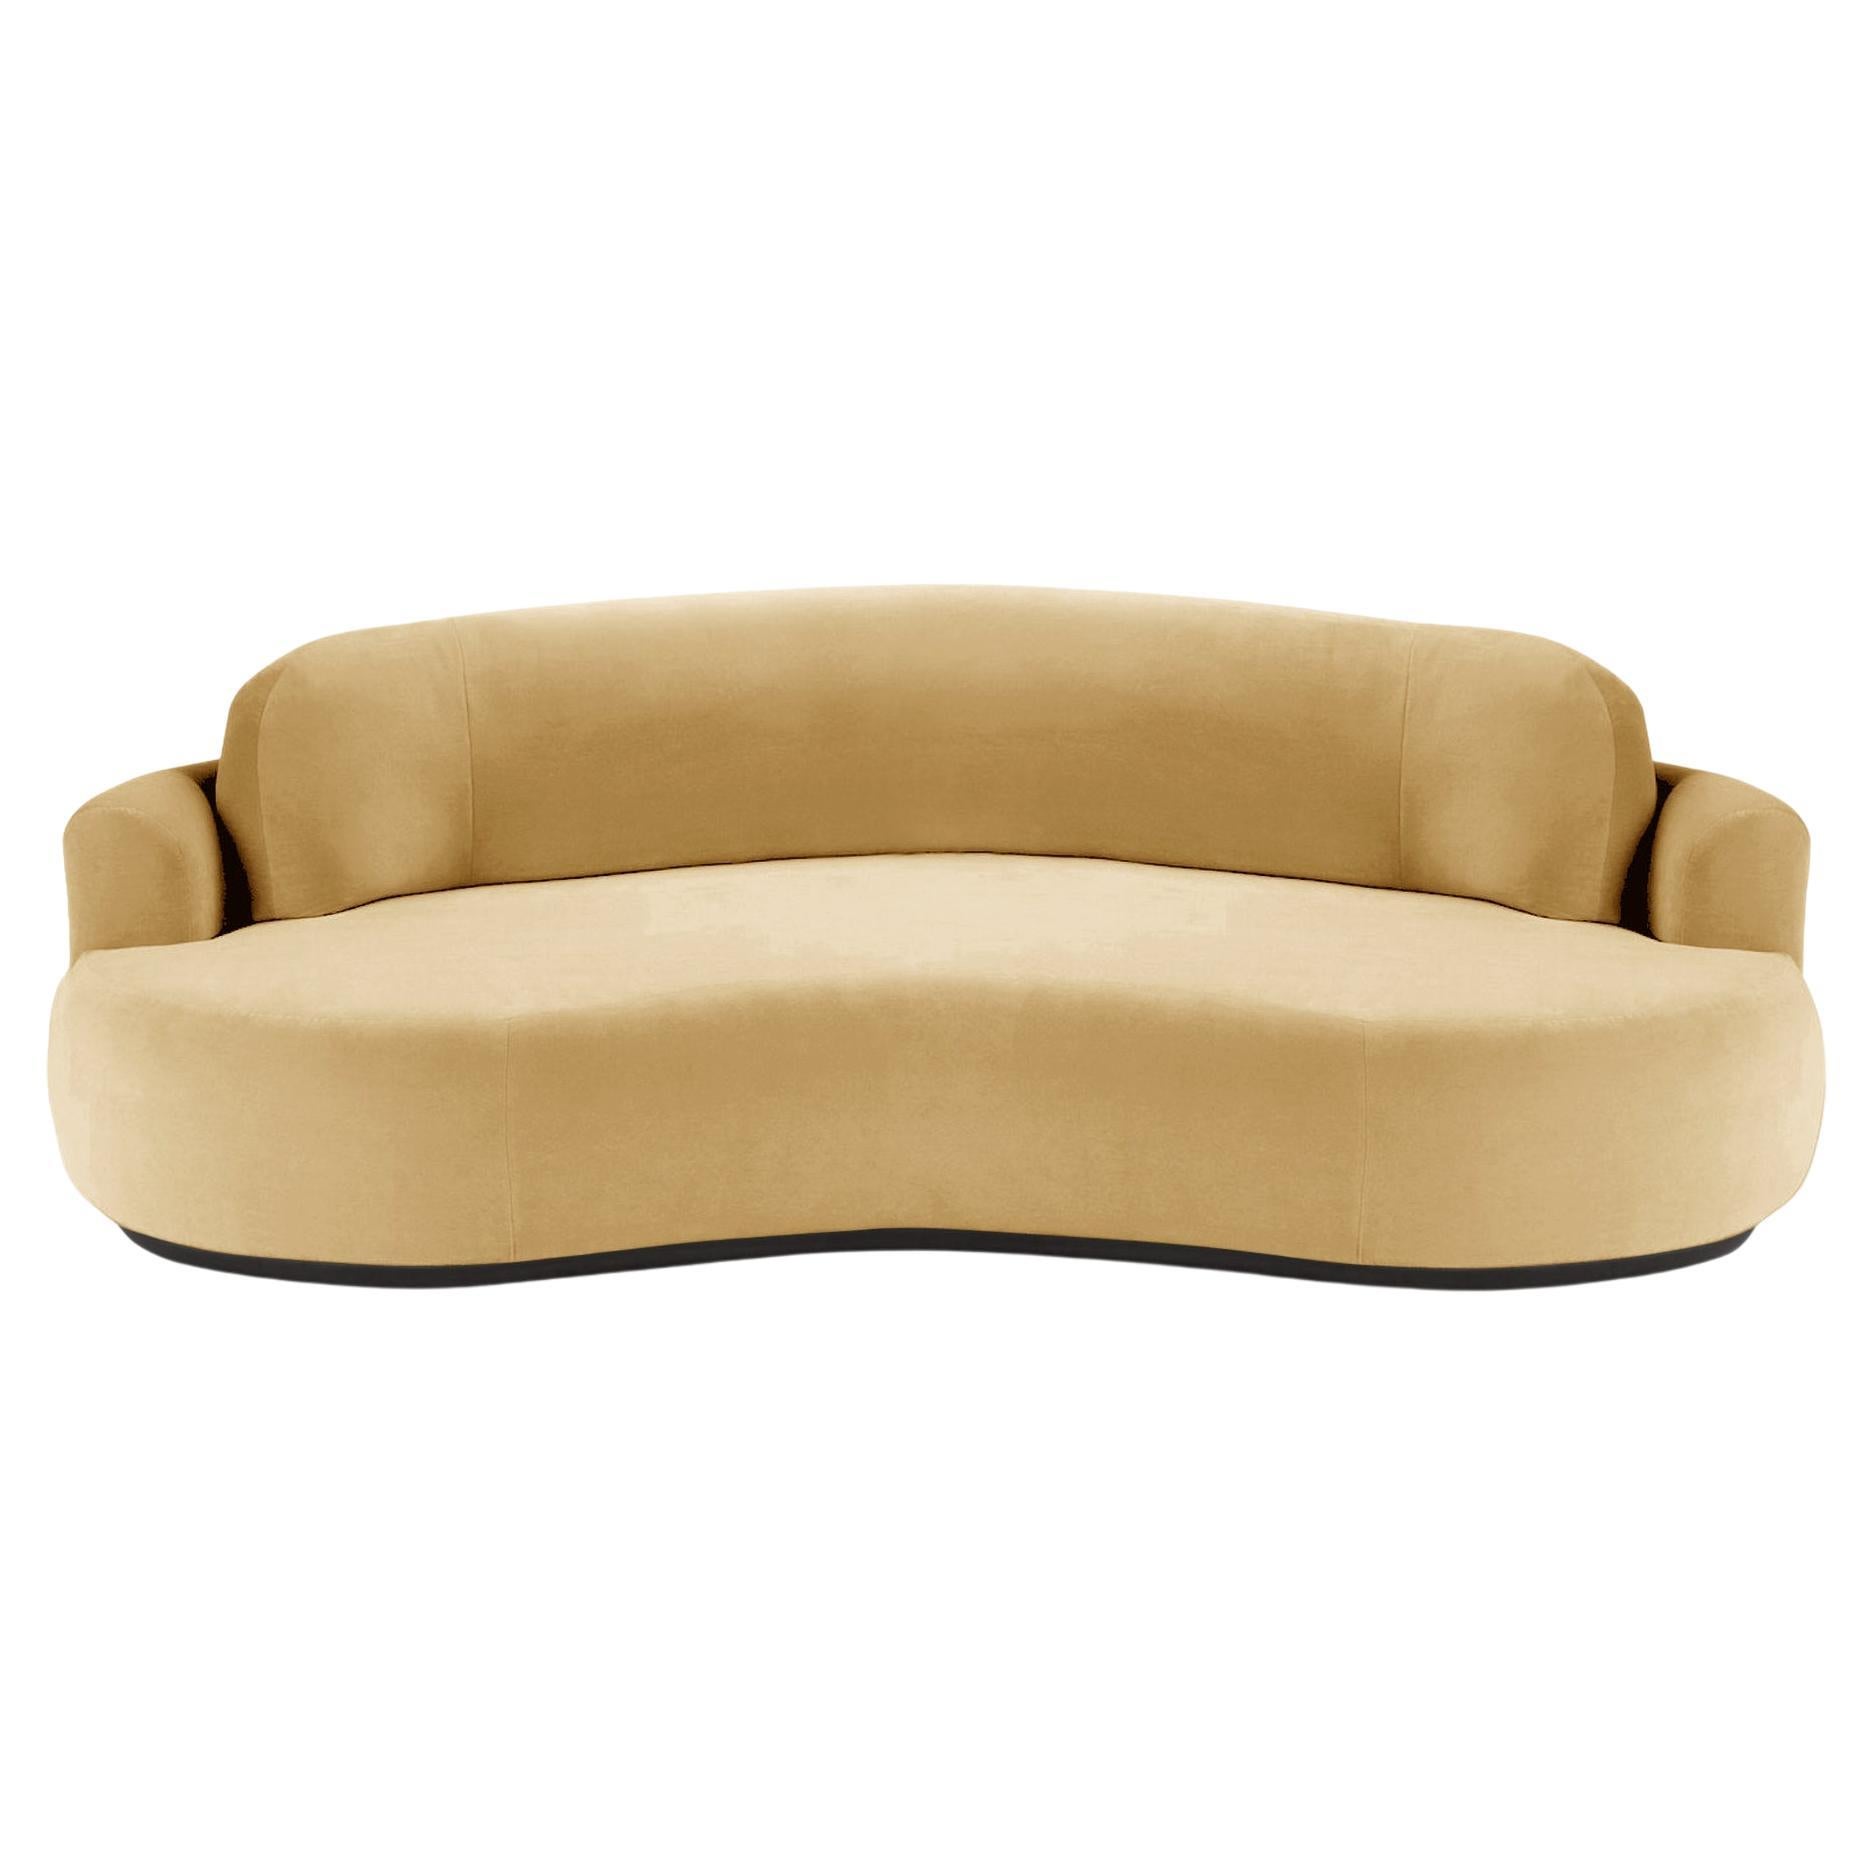 Naked Round Sofa, Medium with Beech Ash-056-5 and Vigo Plantain